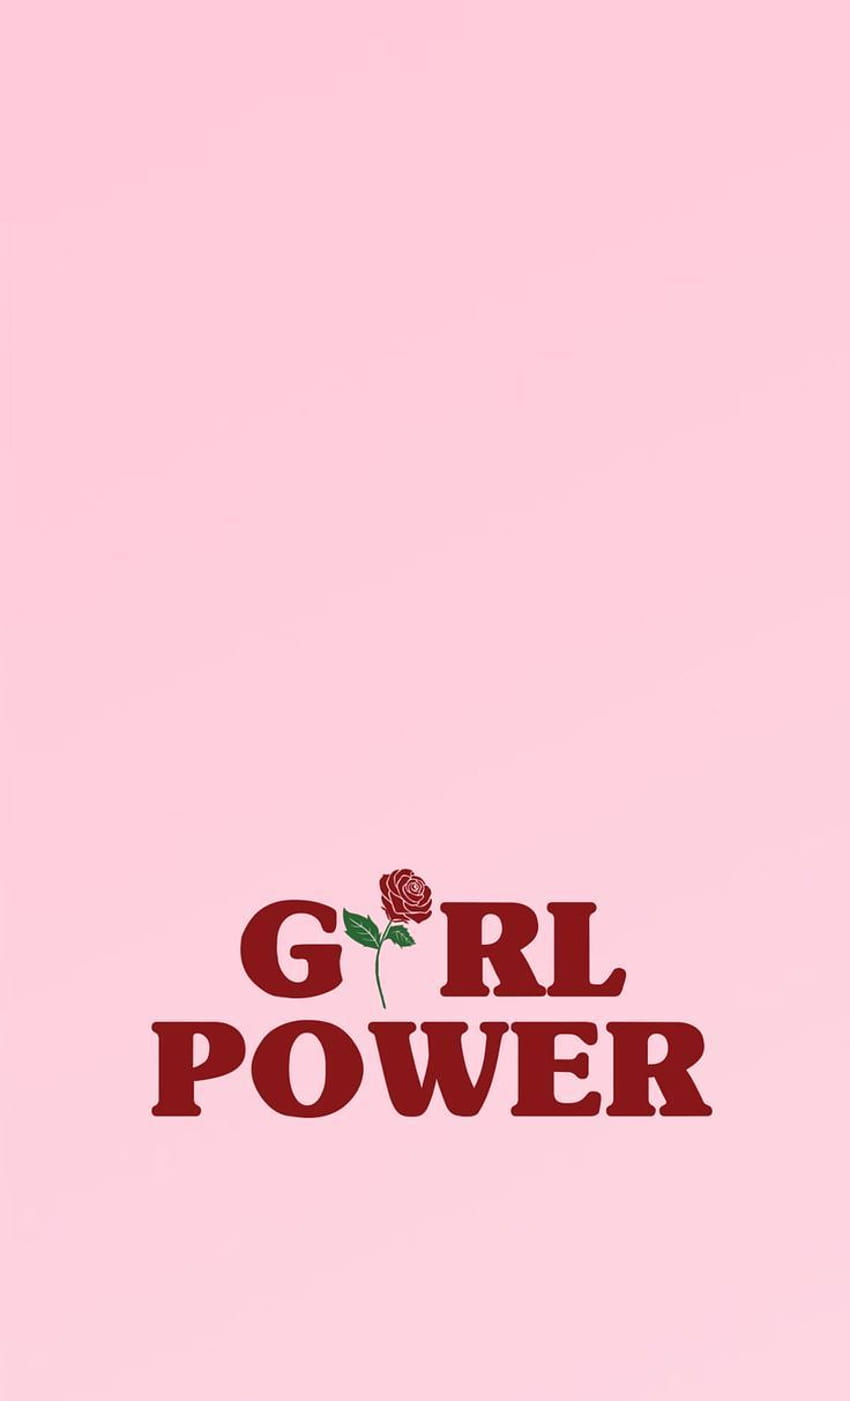 Phone Girl Power 2020, woman power HD phone wallpaper